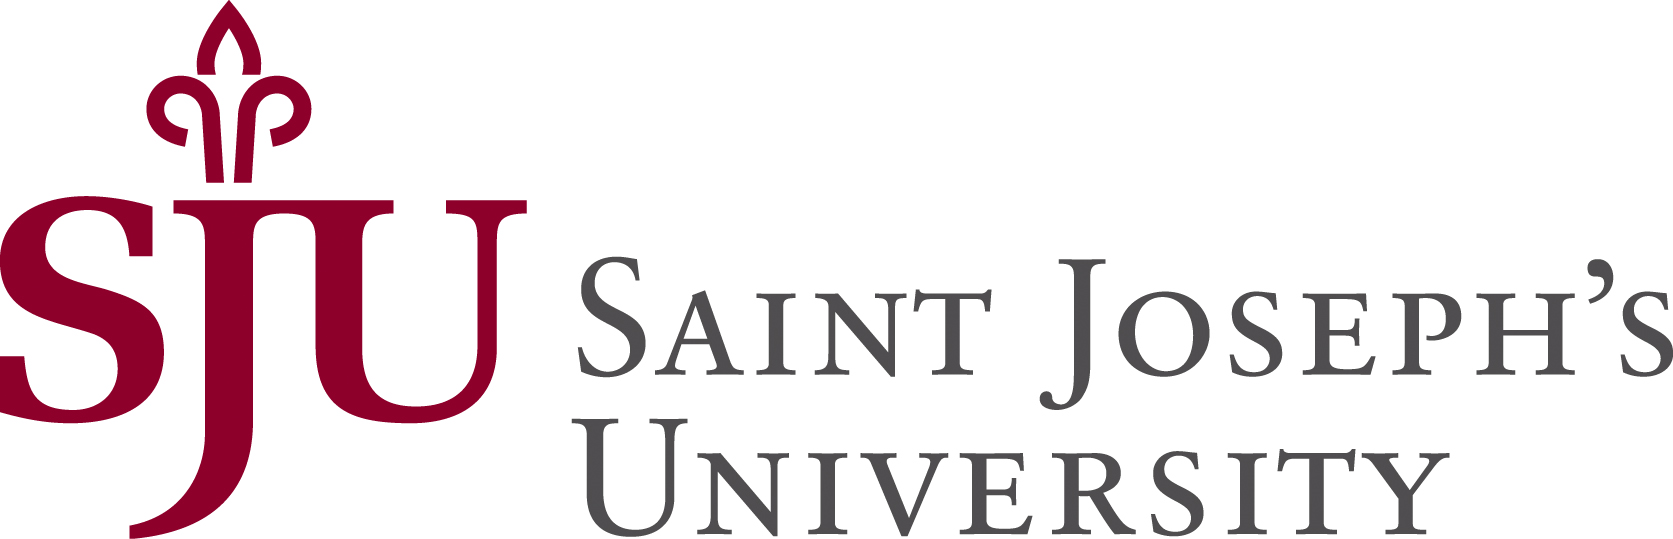 SJU Logo; Red lettering "SJU" and gray lettering "Saint Joseph's University"